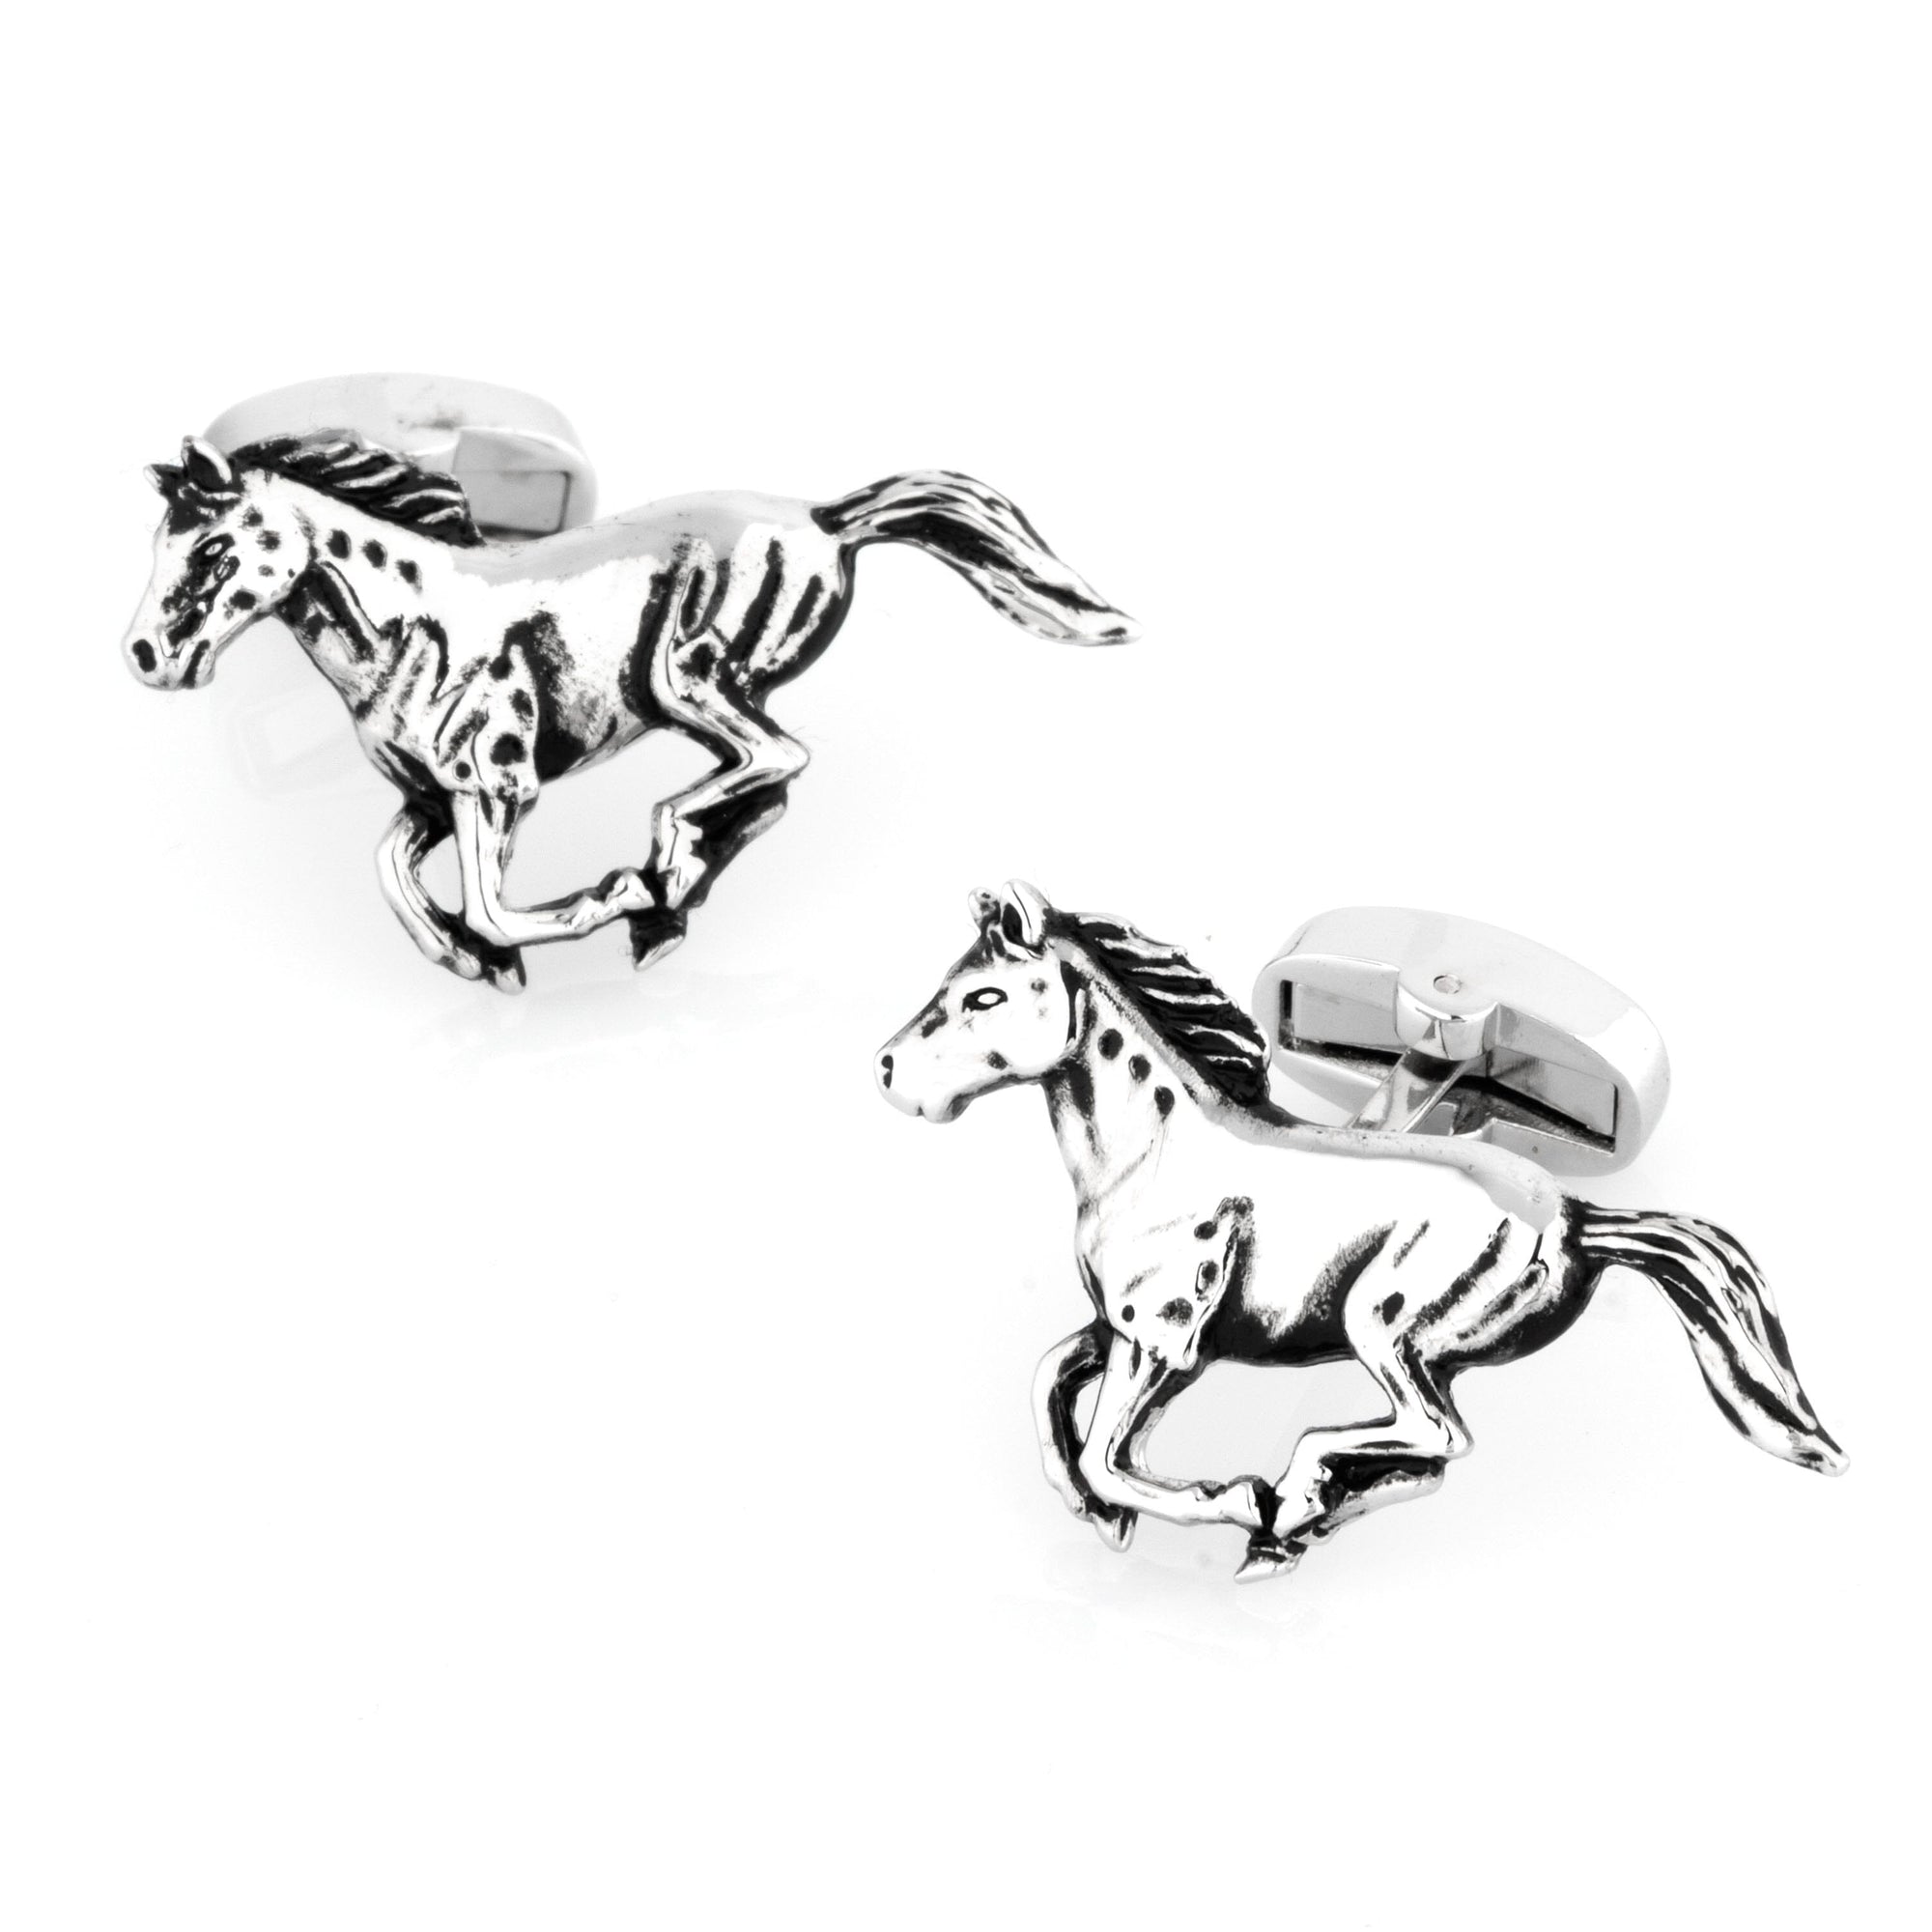 Silver Galloping Horses Cufflinks Novelty Cufflinks Clinks Australia Silver Galloping Horses Cufflinks 